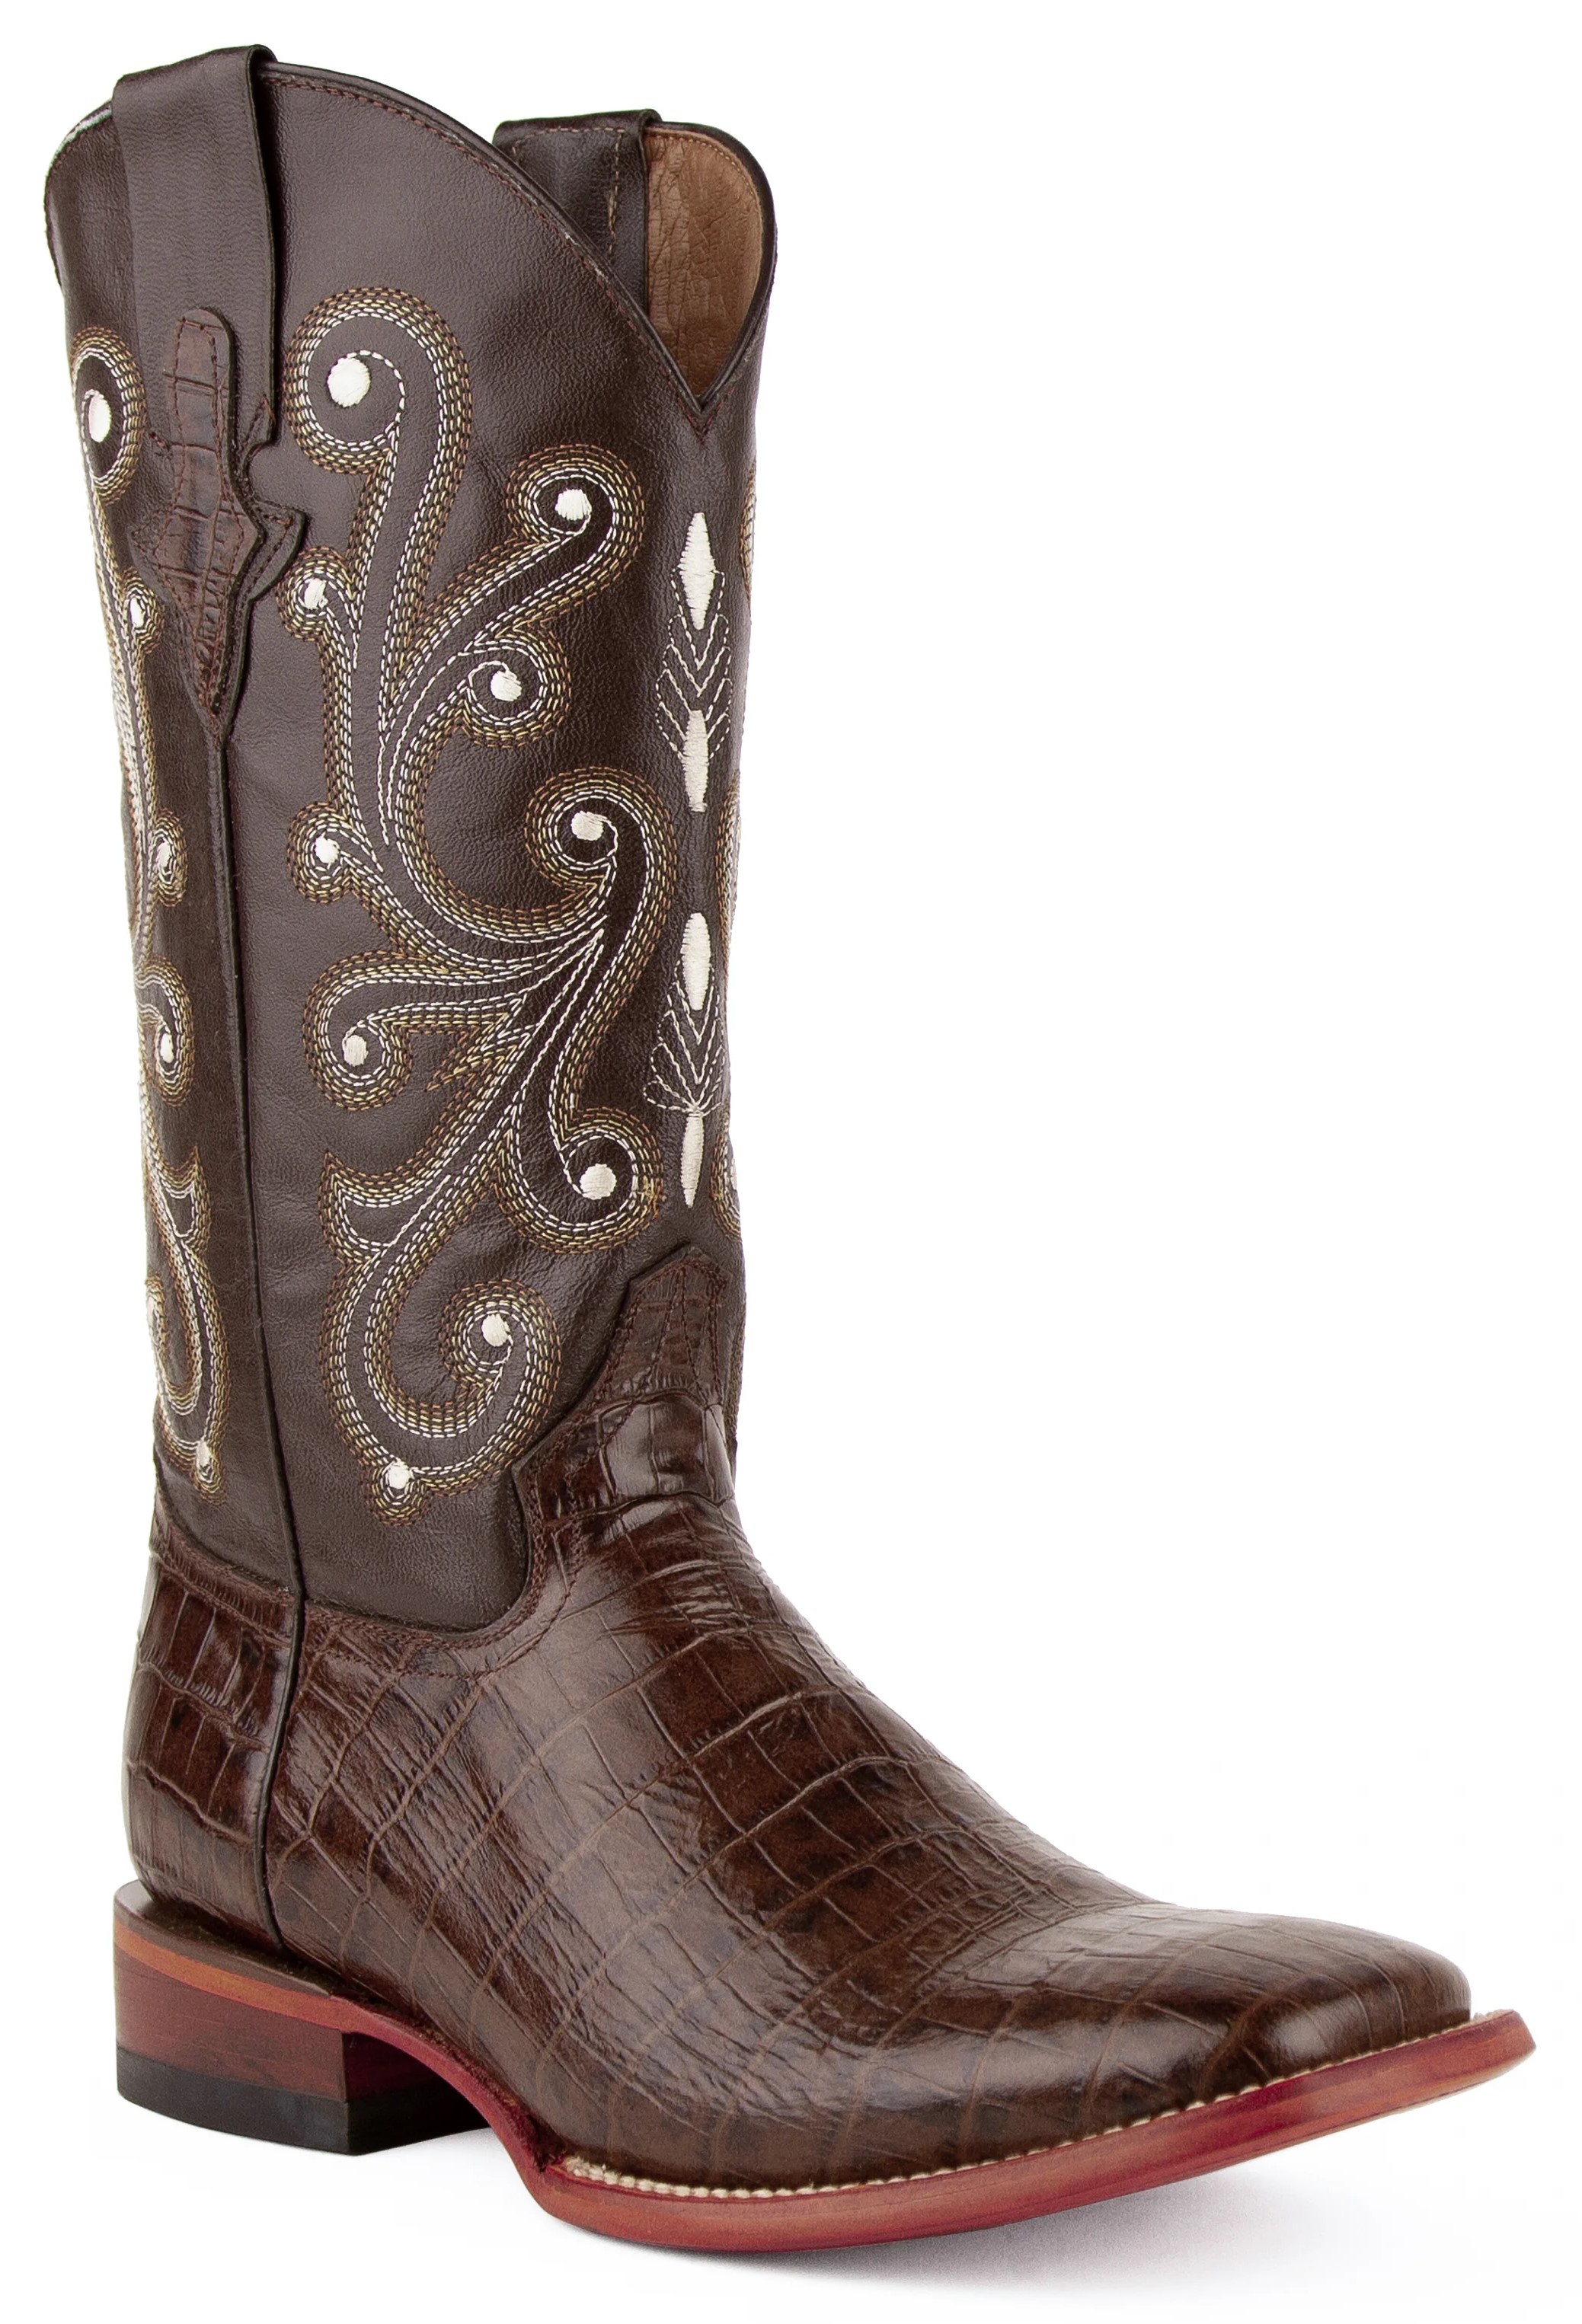 Ferrini "Mustang" Chocolate Alligator Print Leather Square Toe Cowboy Boots 40793-09